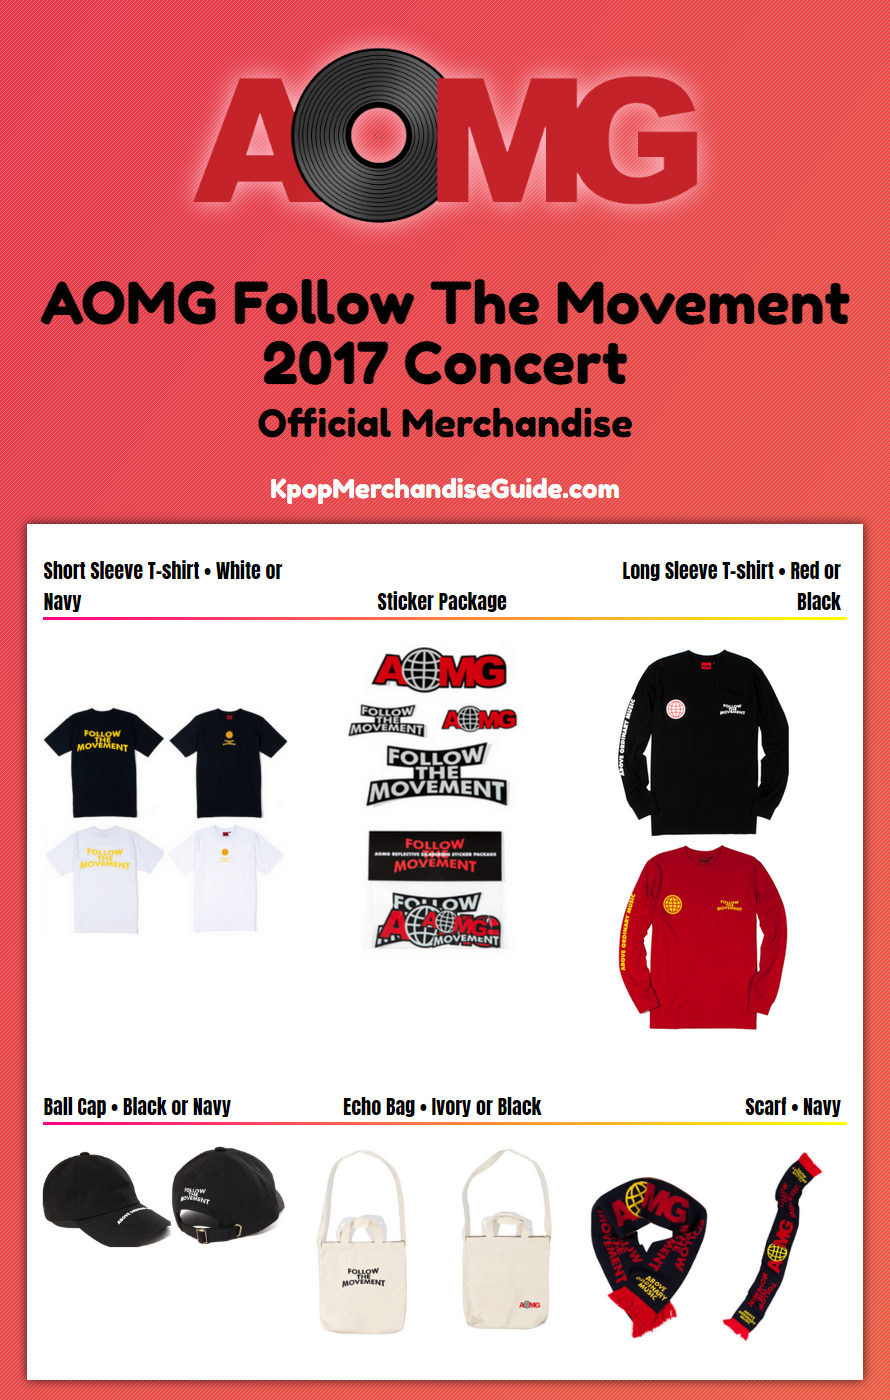 Jay Park AOMG Follow The Movement 2017 Tour Merchandise